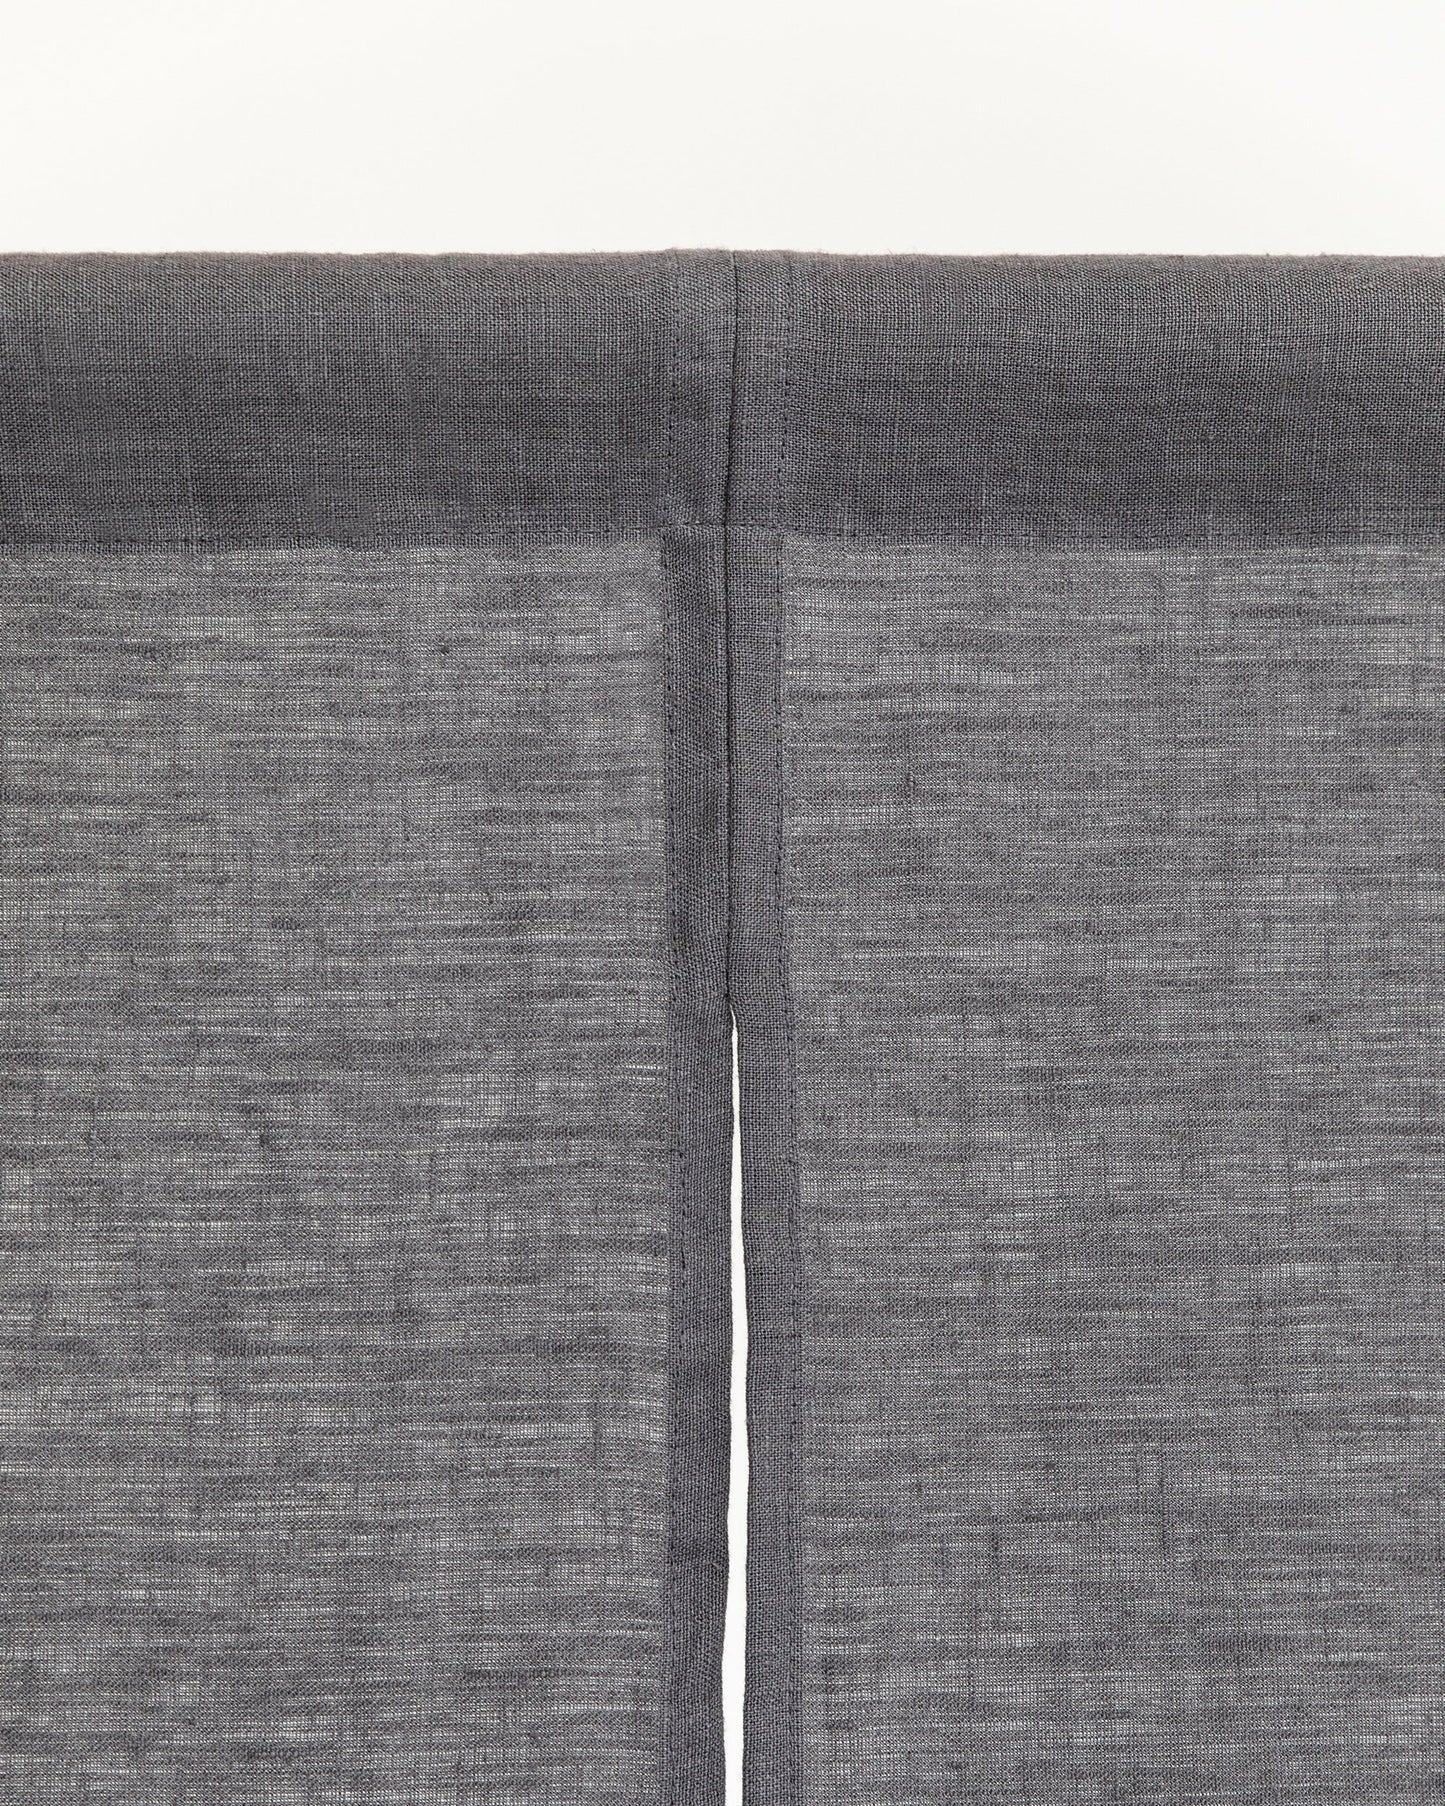 Custom size linen noren curtains (1 pcs) in Charcoal gray - MagicLinen